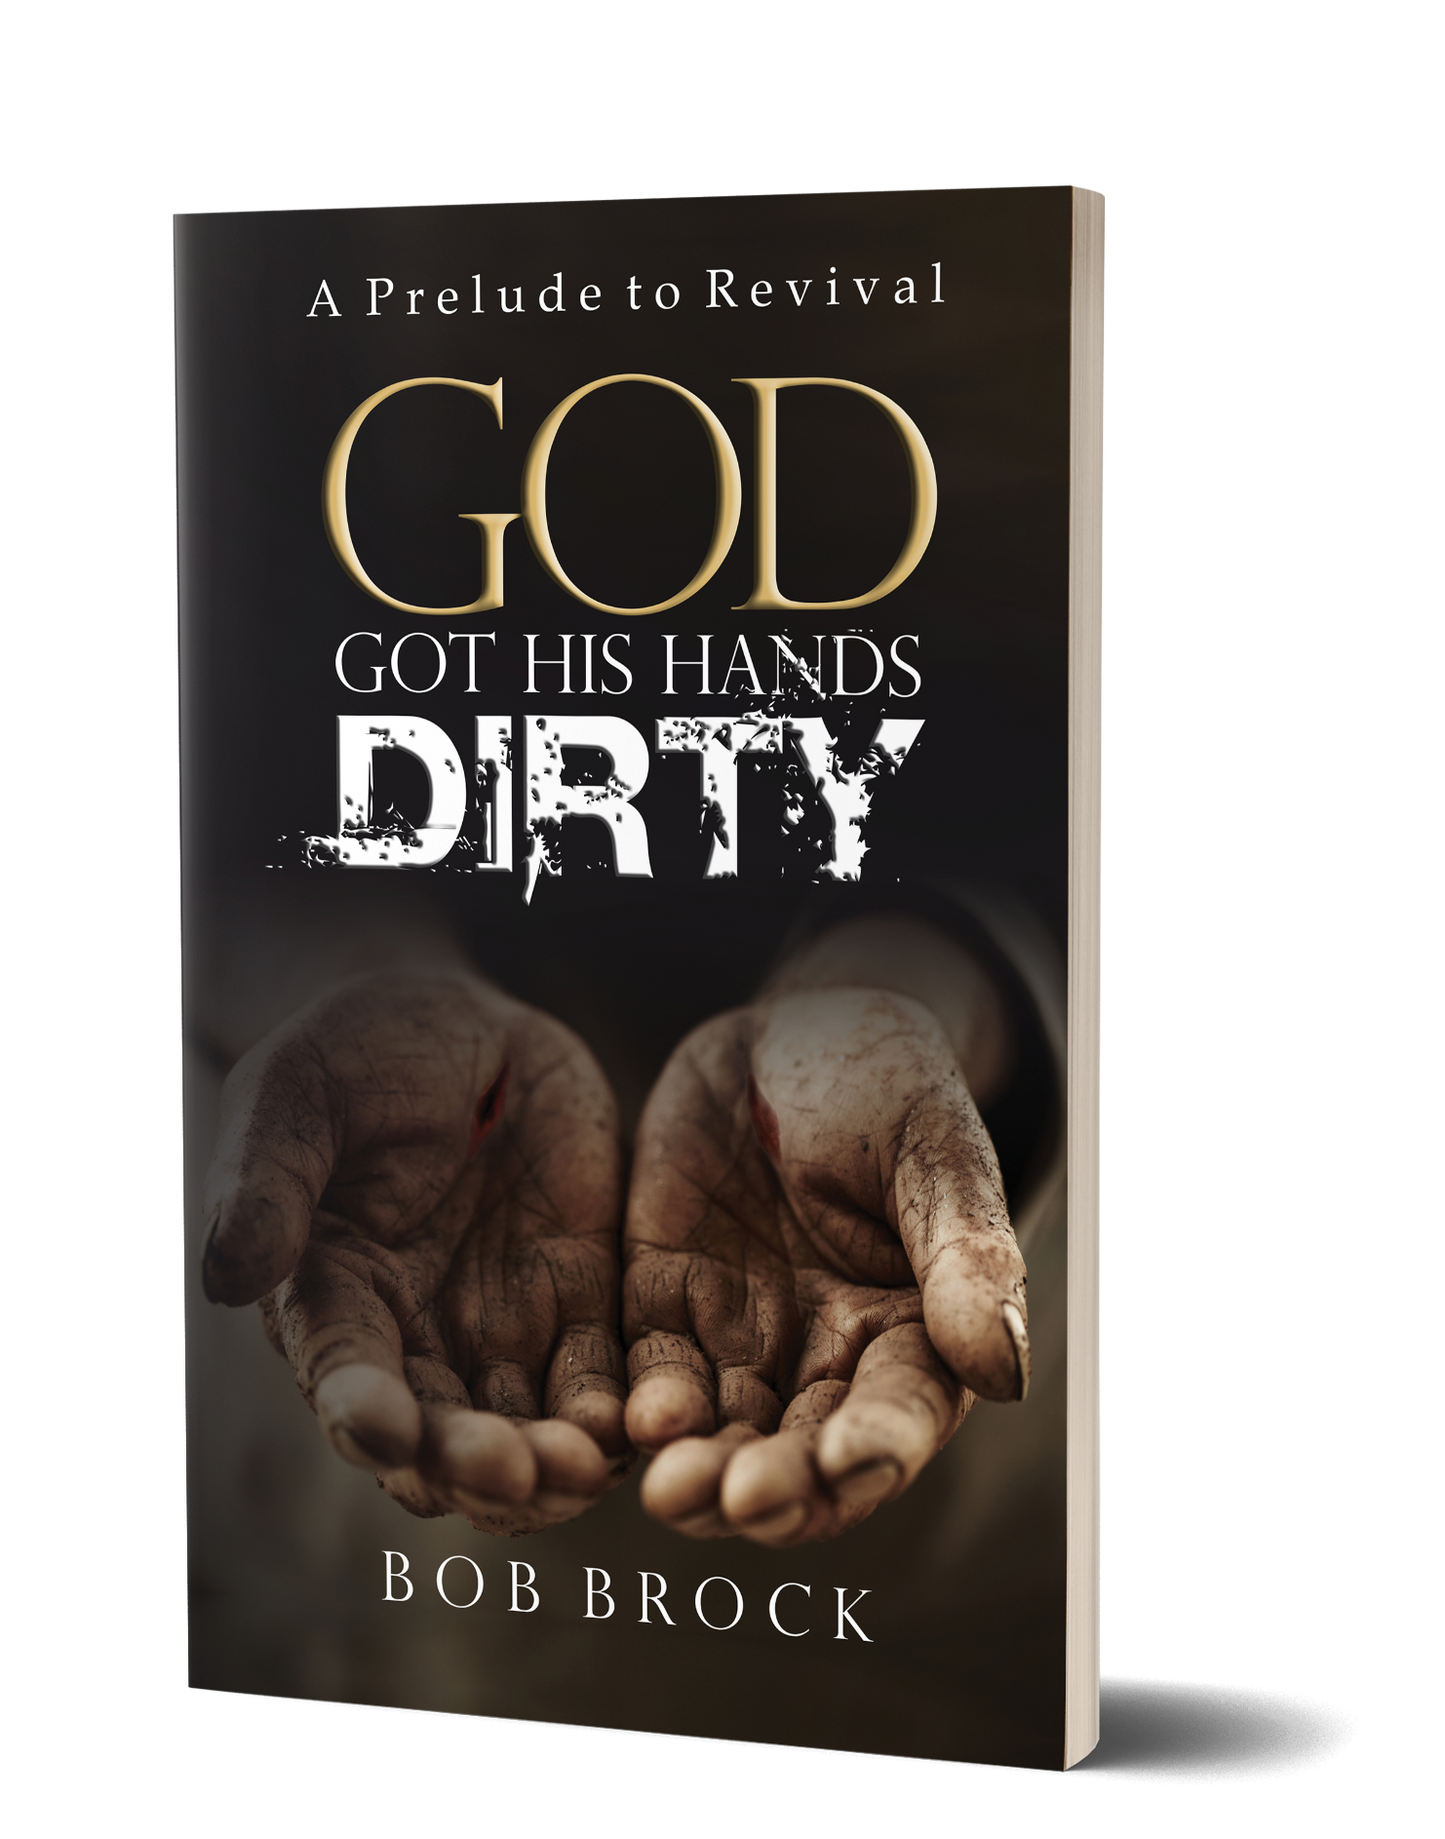 God Got His Hands Dirty by Bob Brock